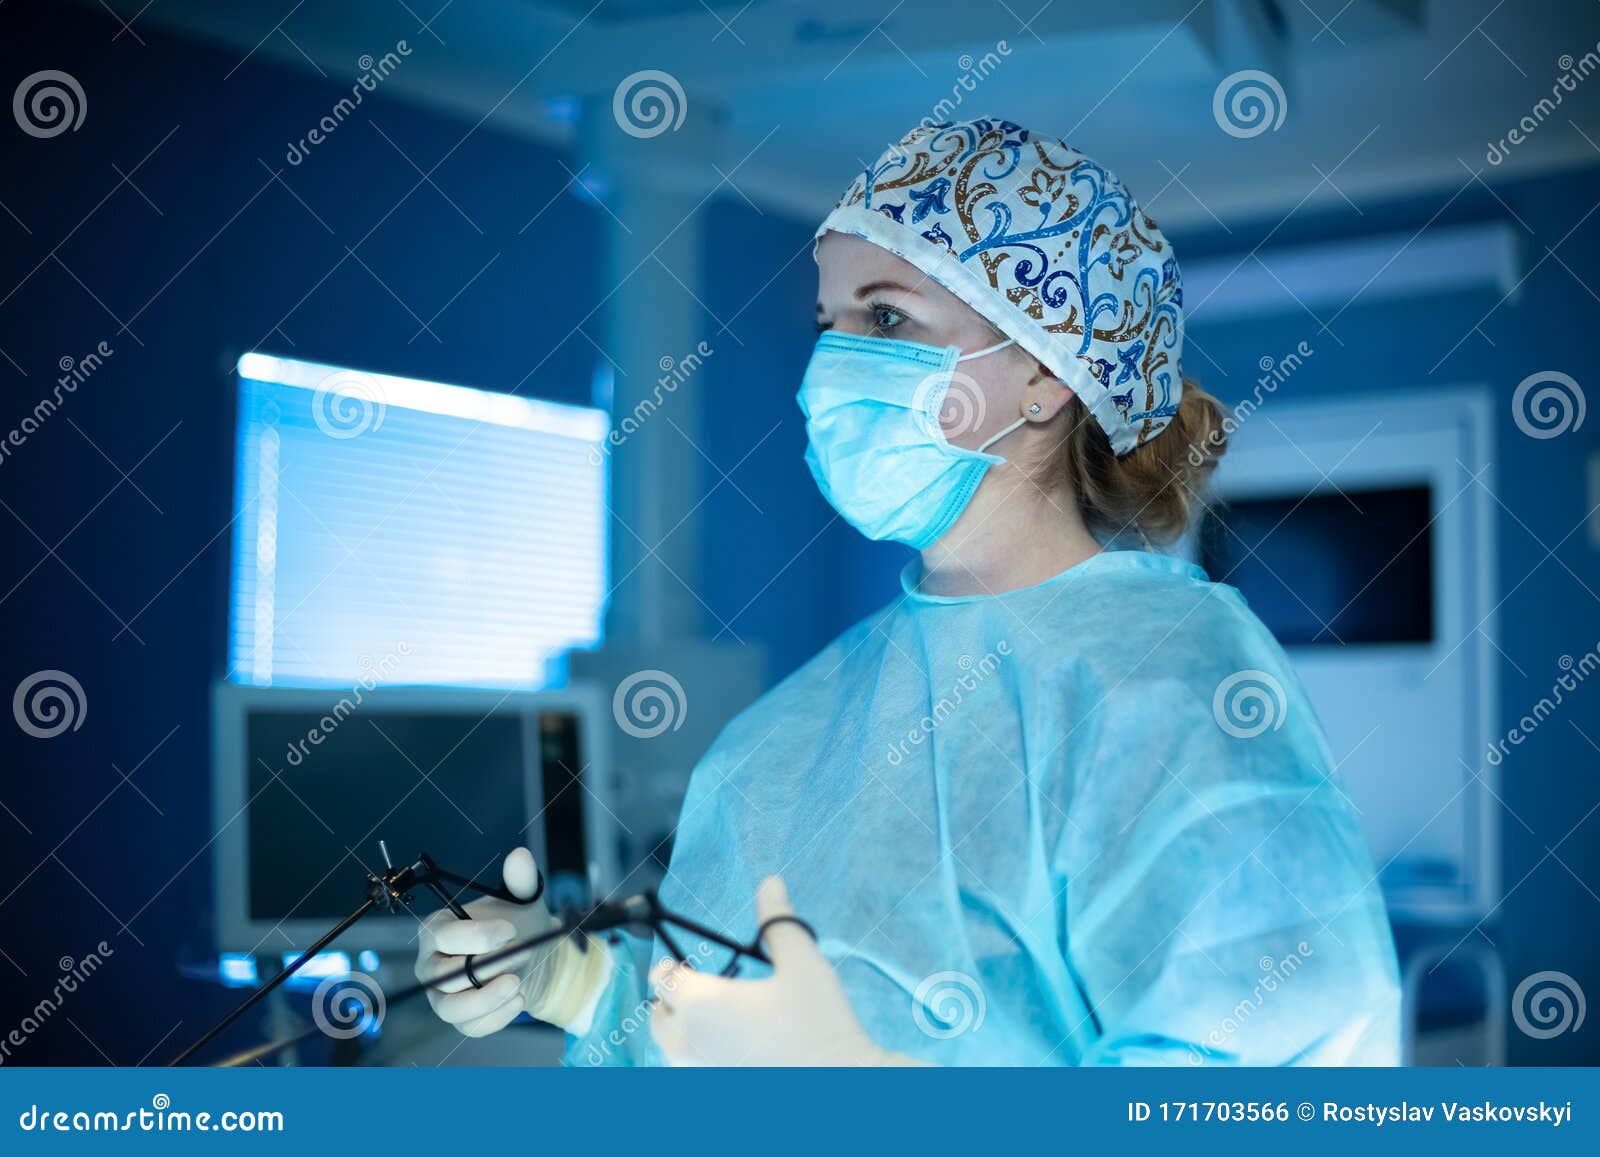 surgeon woman doing laparoscopic operation